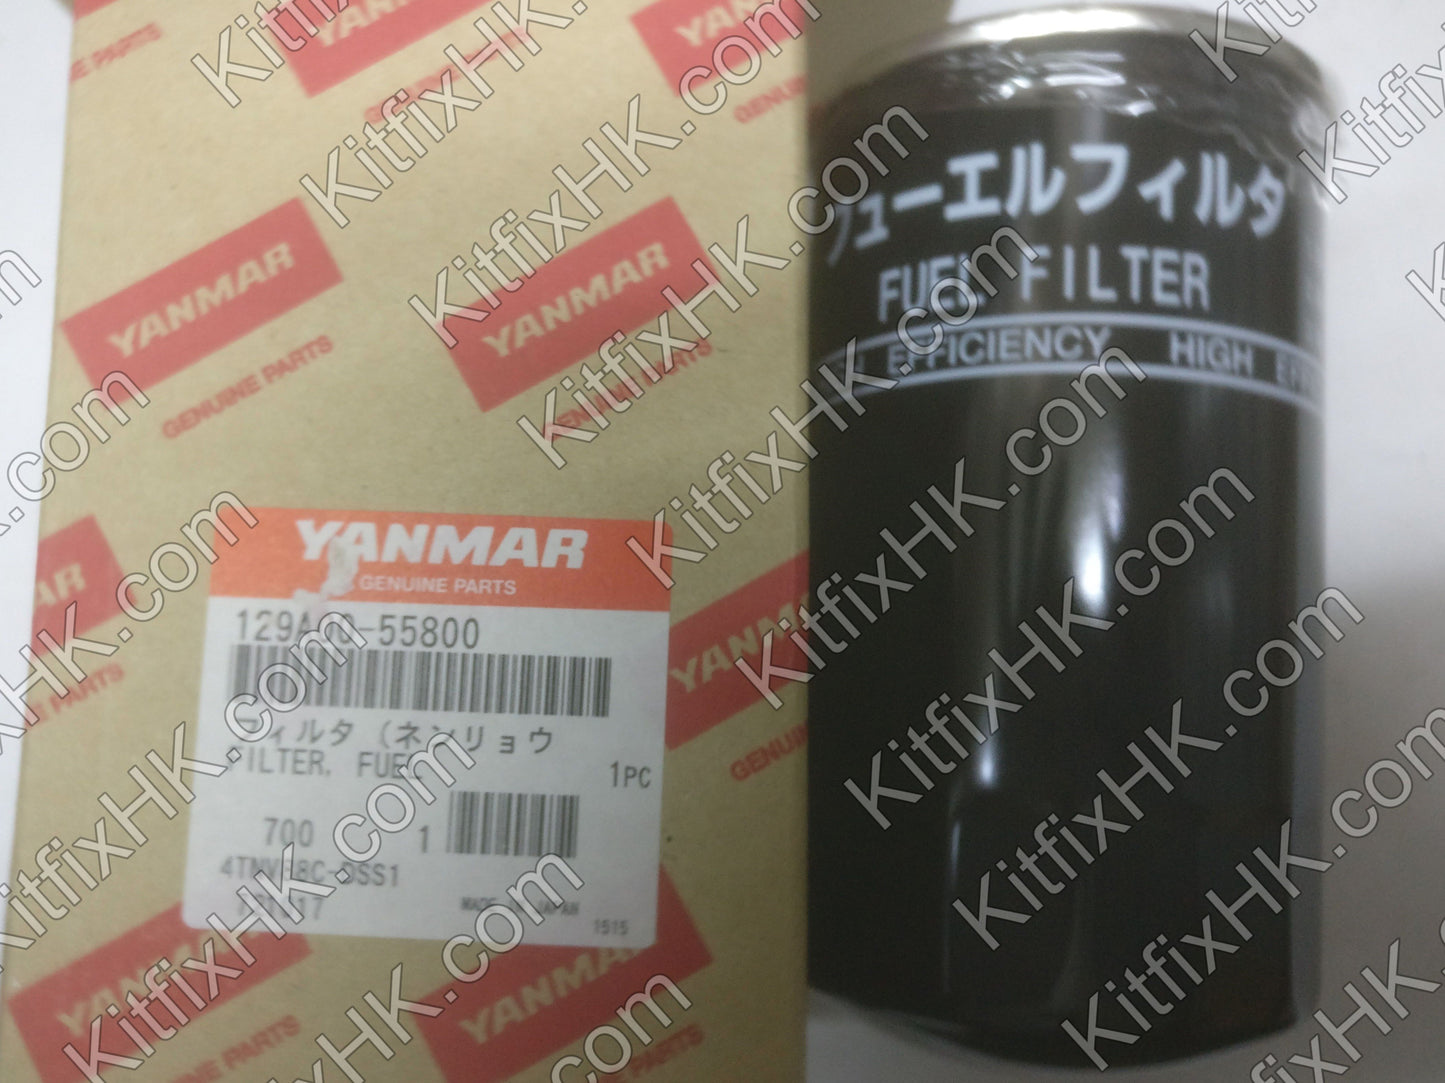 Yanmar fuel filter - 129A00-55800